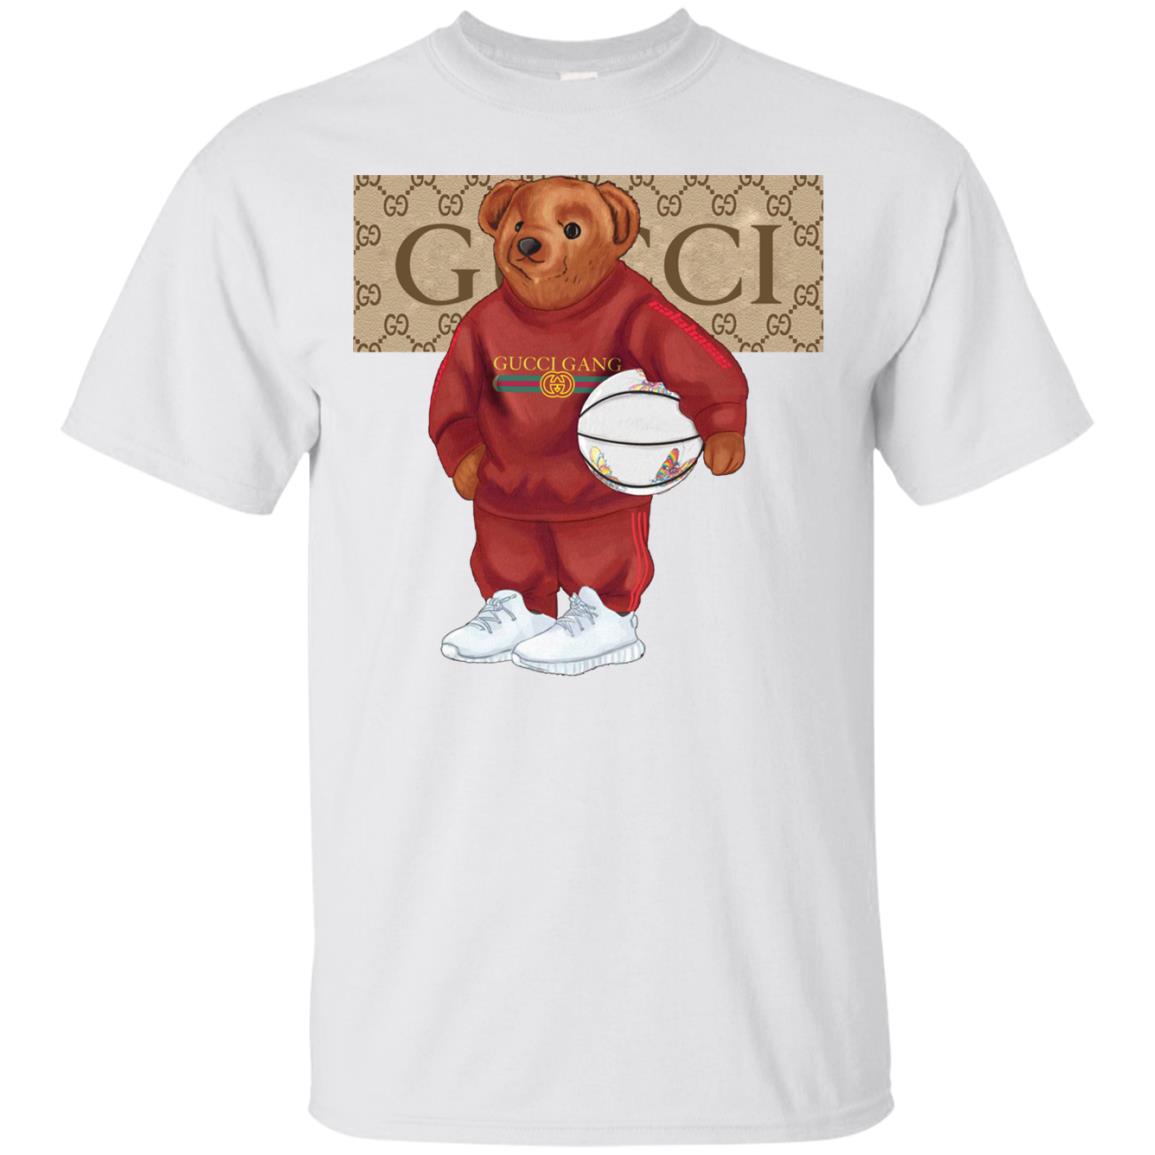 gucci t shirt with teddy bear